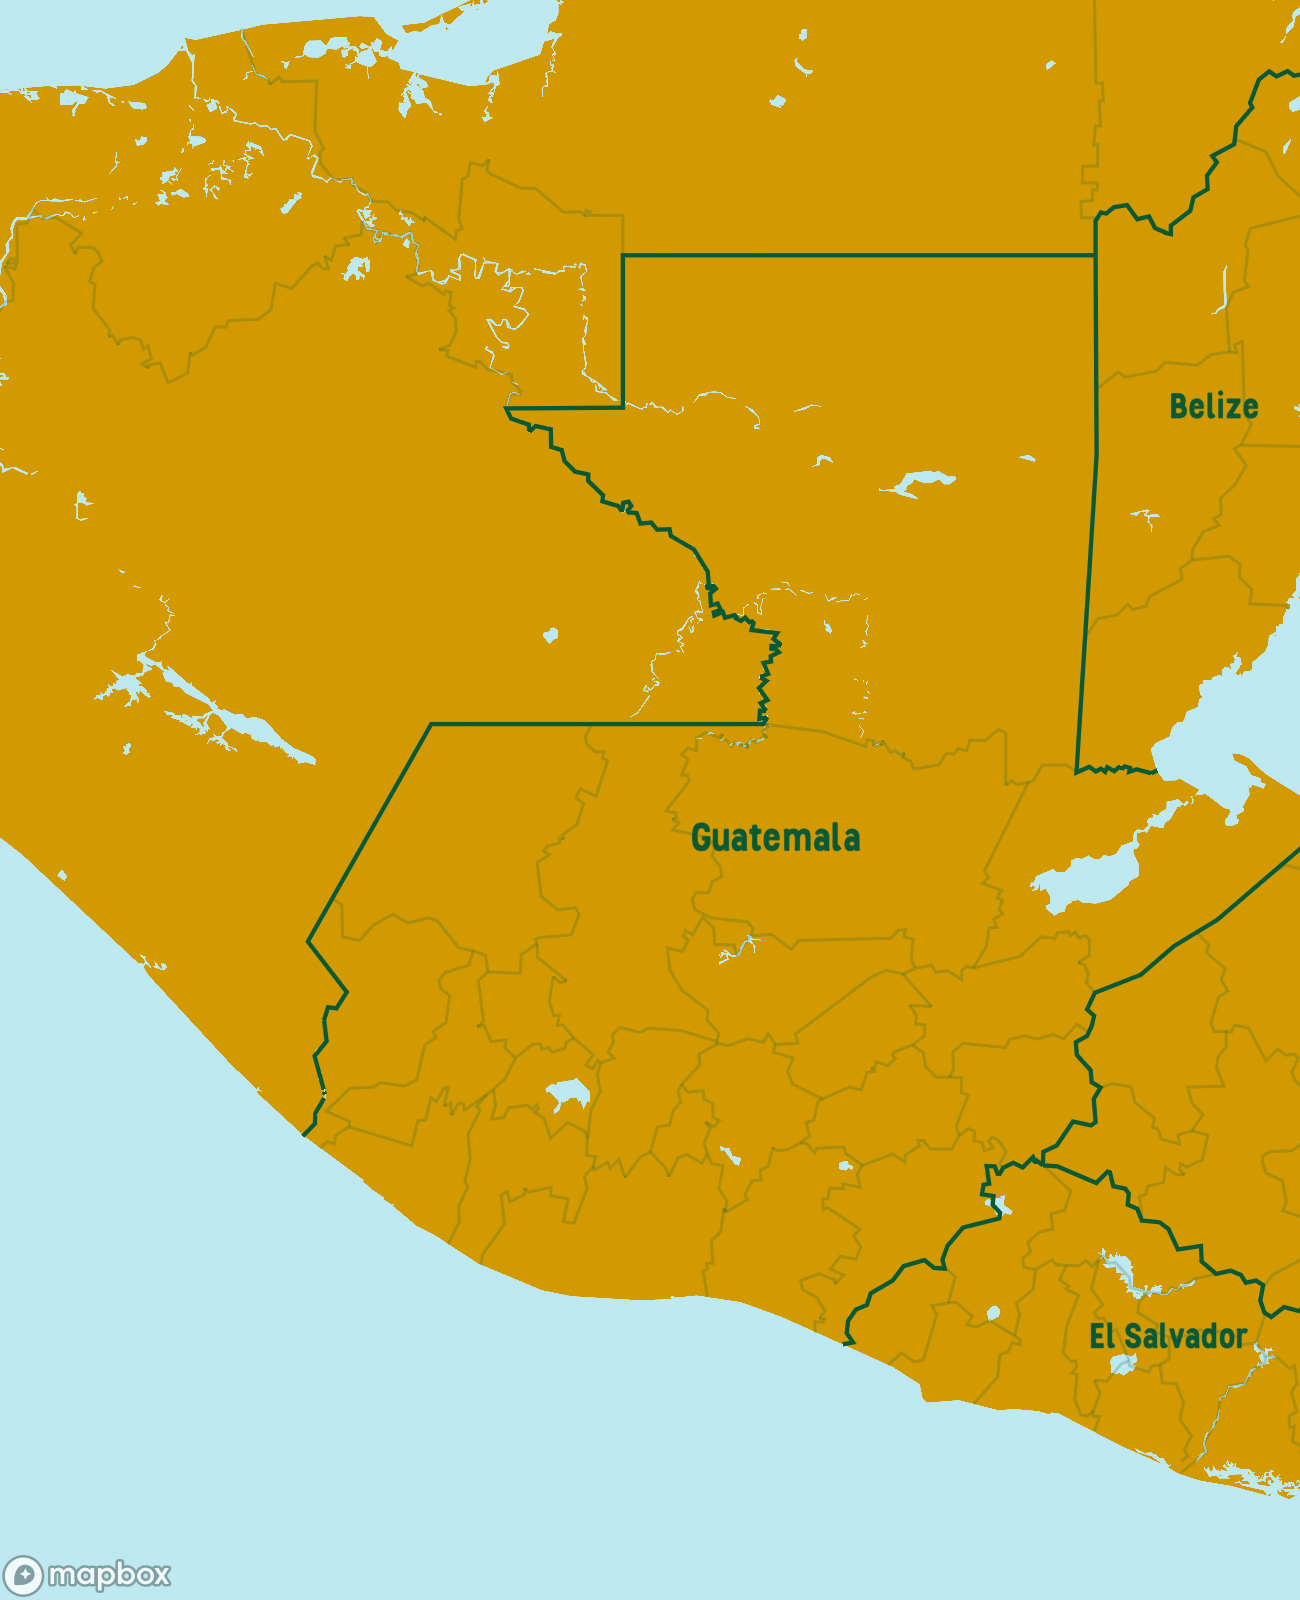 Rio Dulce Fronteras, Izabal Map Preview